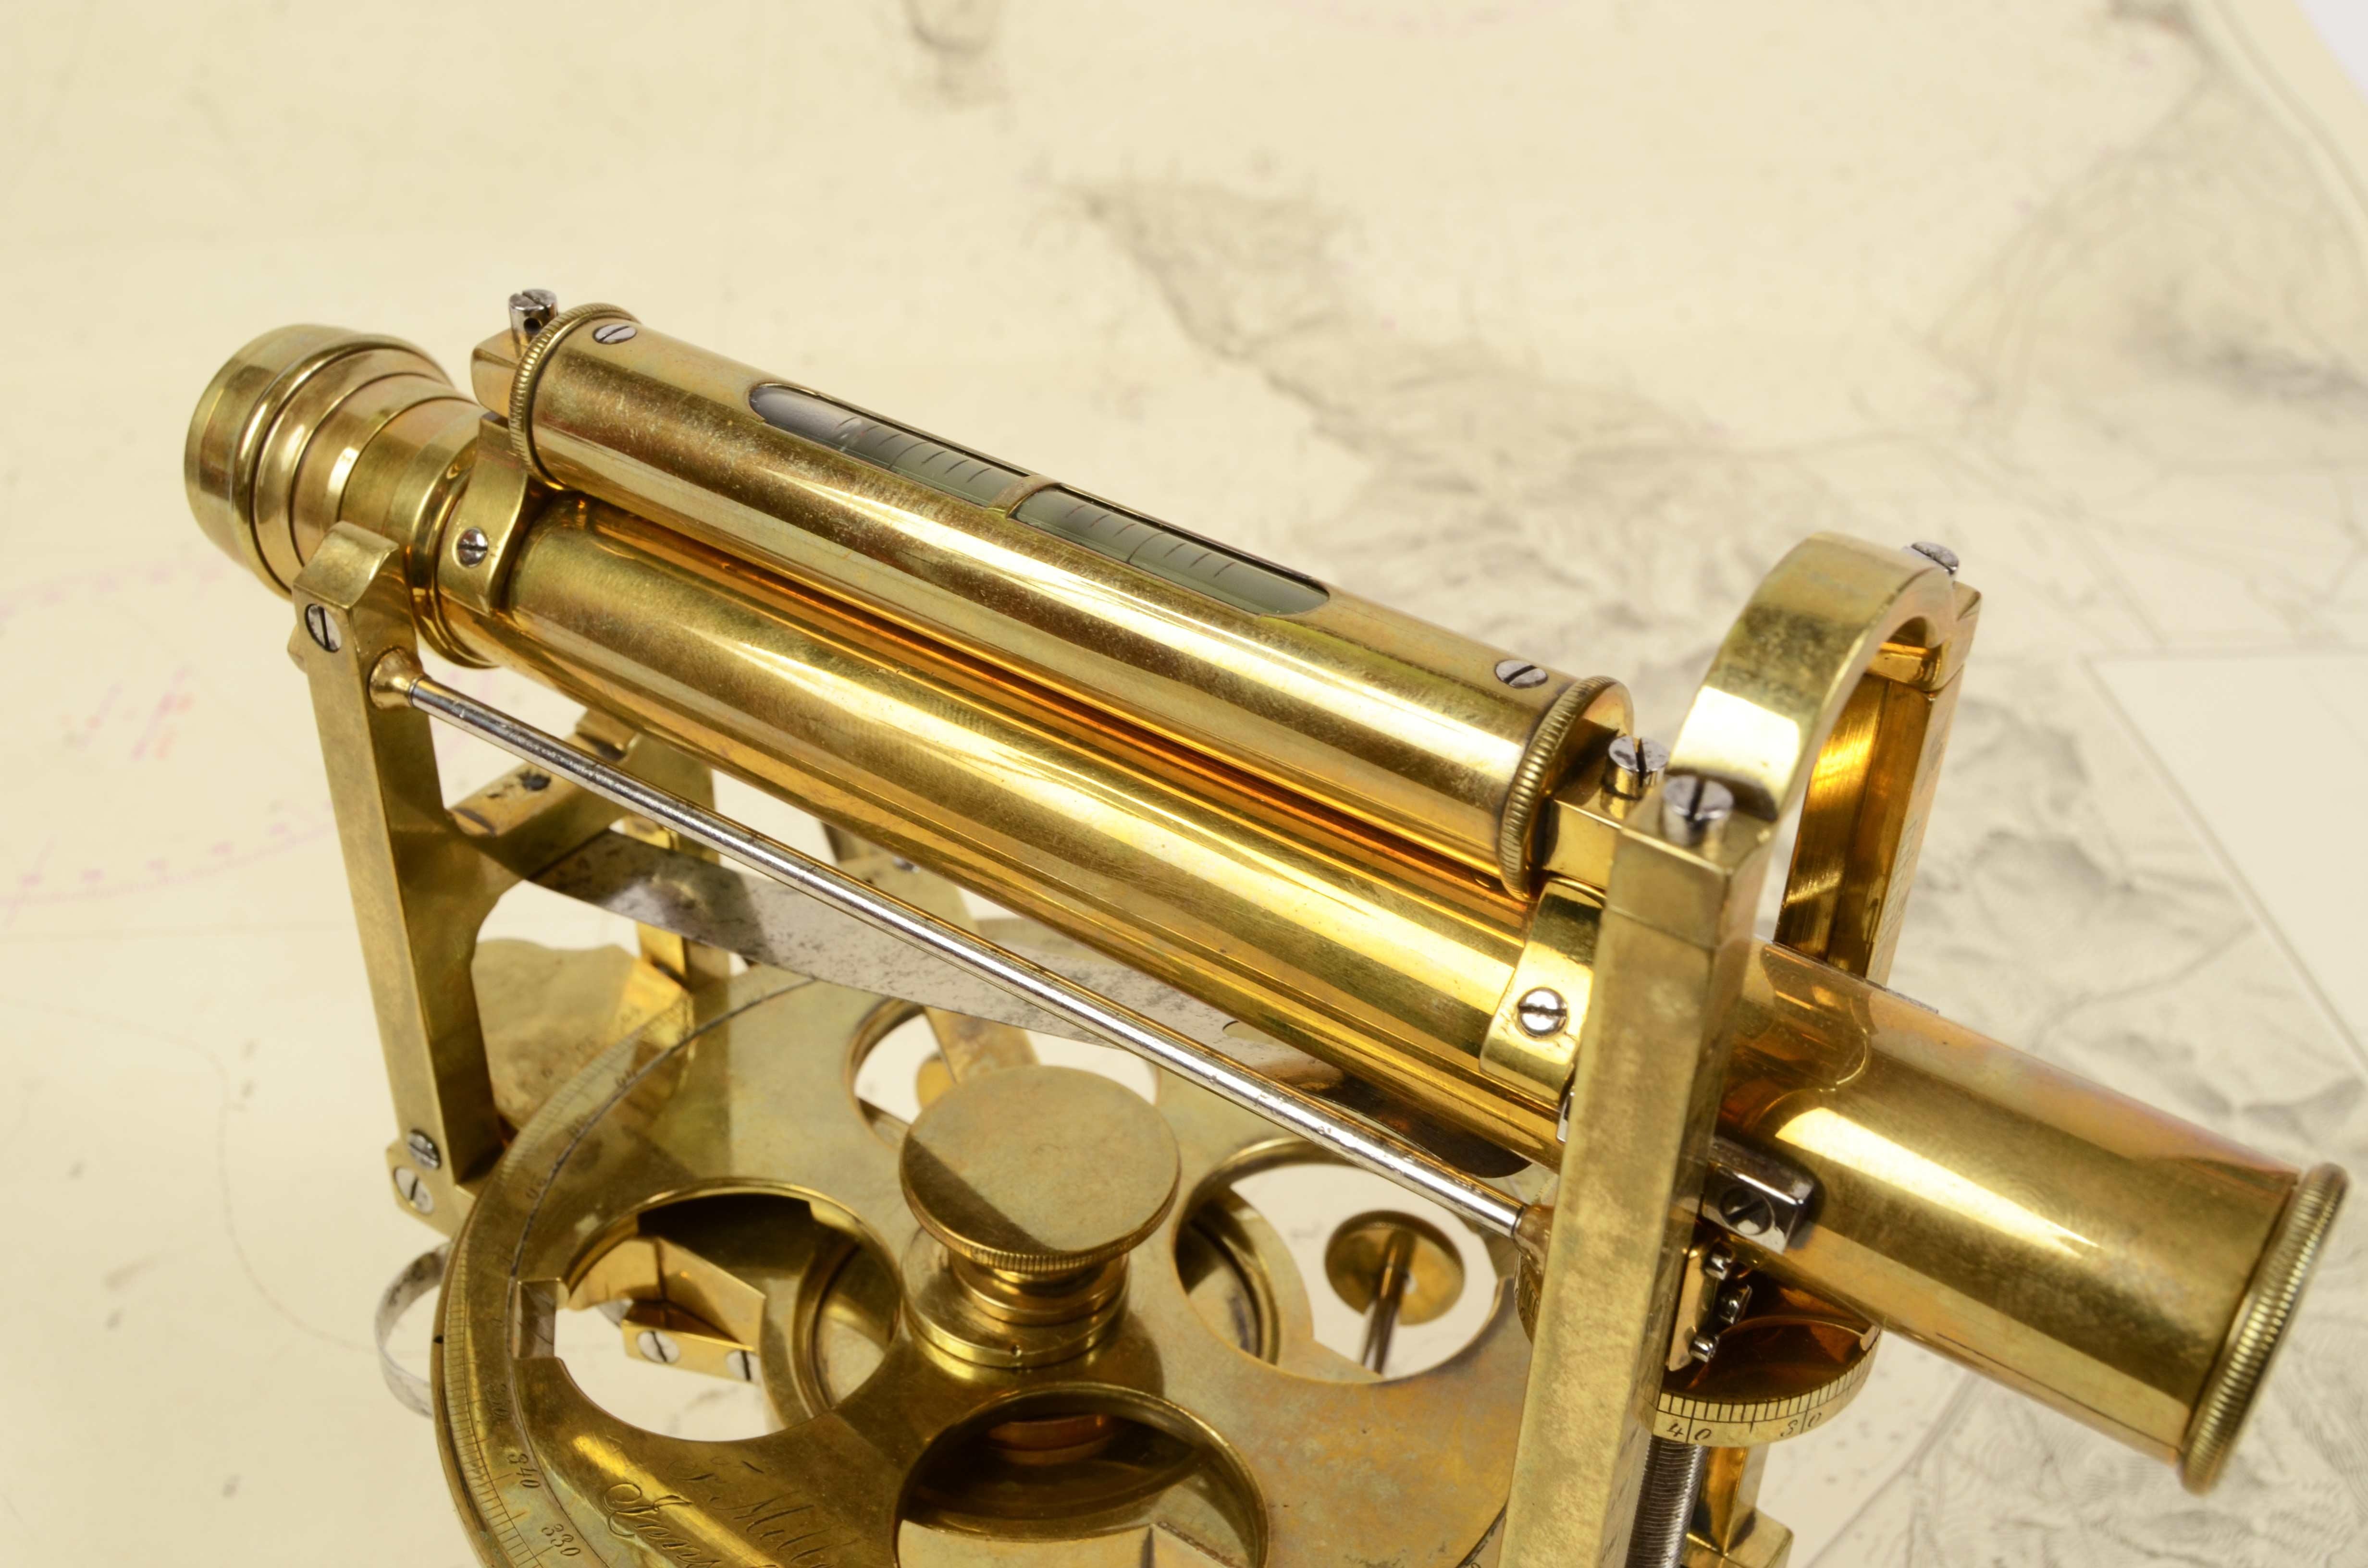 1870s Brass Clisigonimeter F. Miller Innsbruck Surveyor Measurement Instrumemt 6